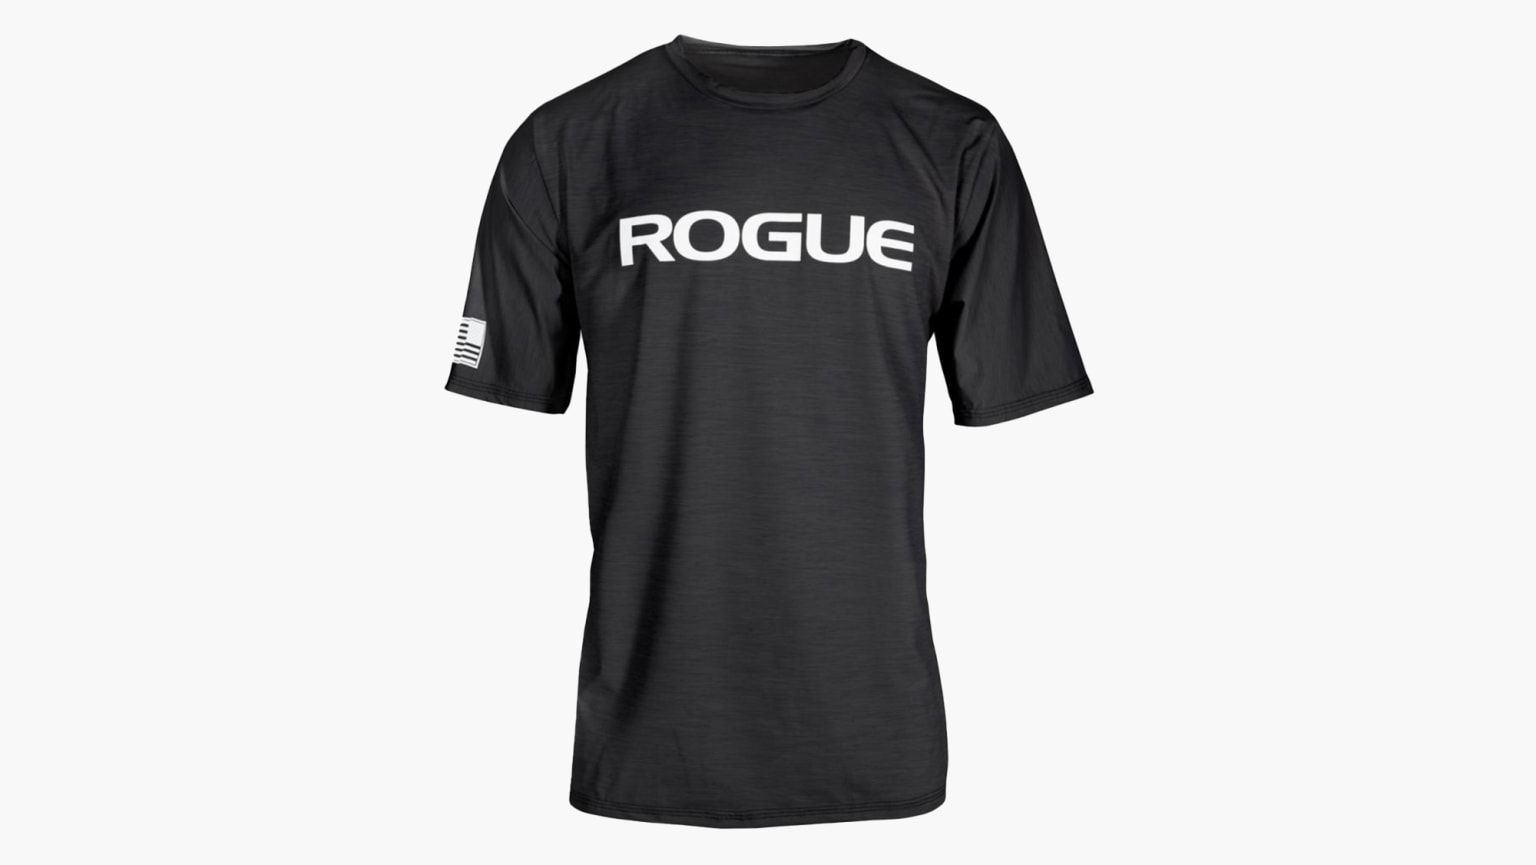 Rogue Men's Performance Sun Shirt - Heather Black / White